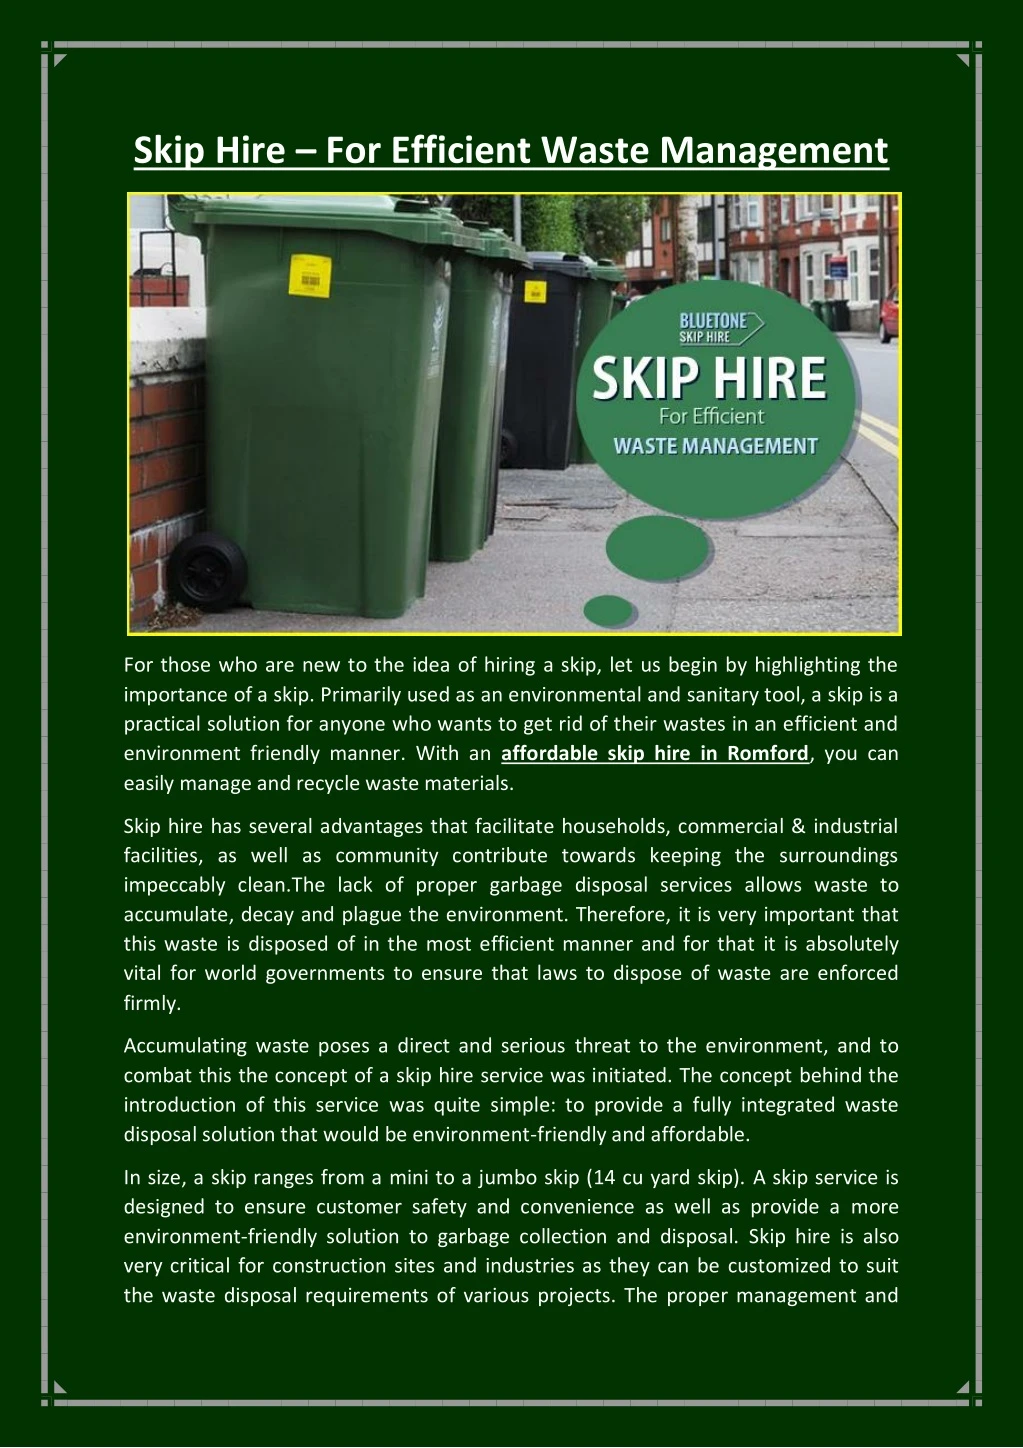 skip hire for efficient waste management